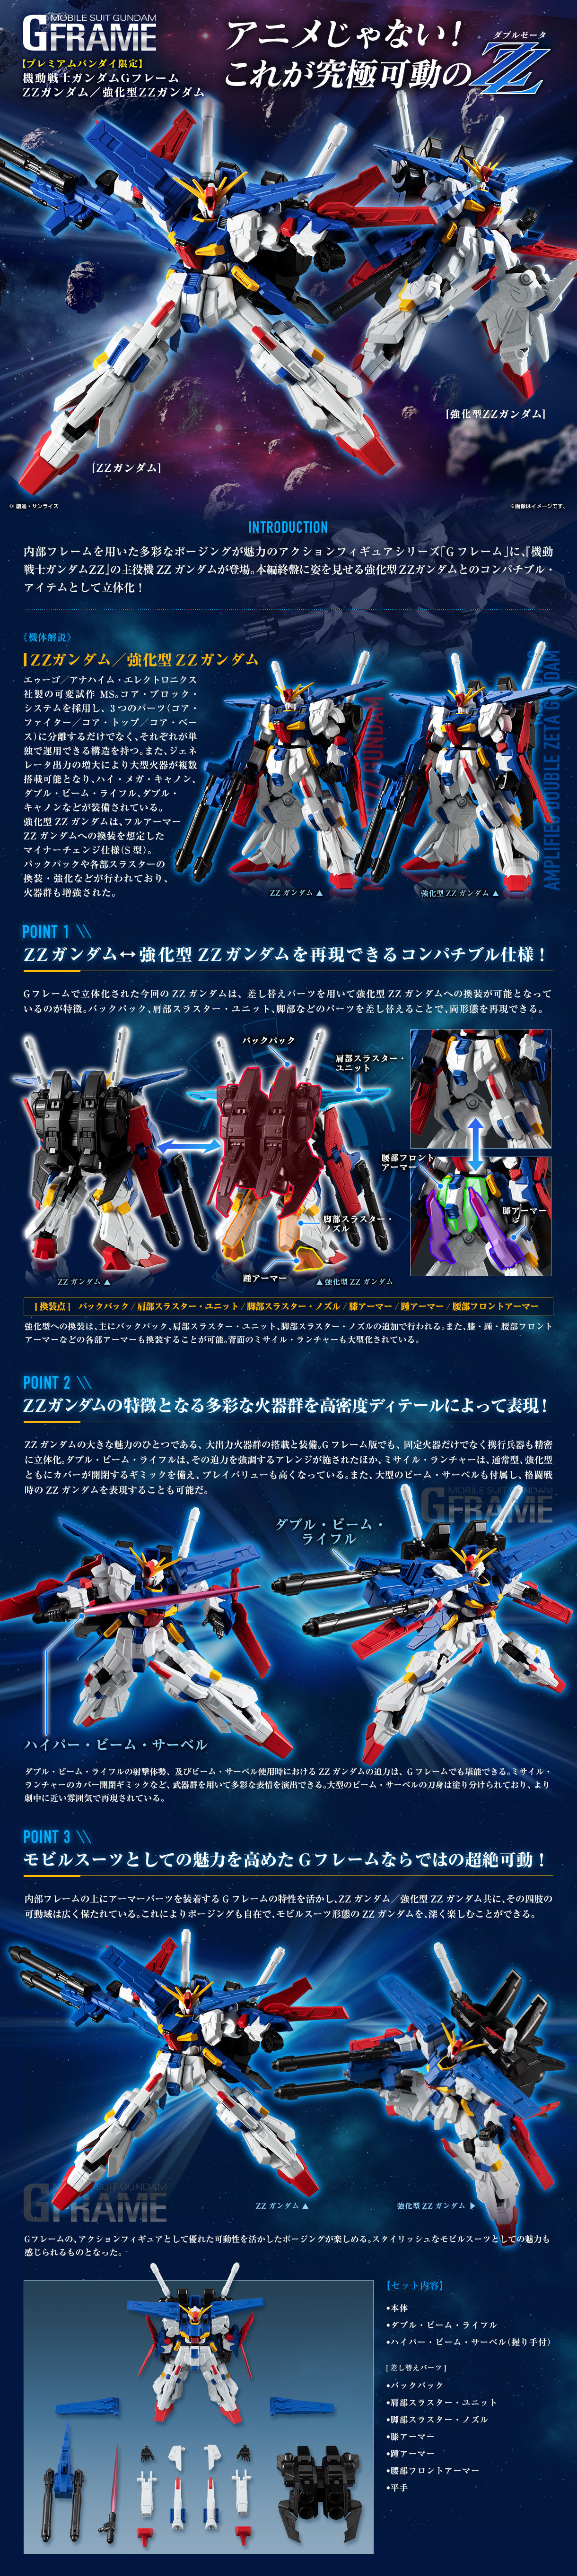 Mobile Suit Gundam G Frame SP—MSZ-010 Double Zeta Gundam/MSZ-010S Enhanced ZZ Gundam